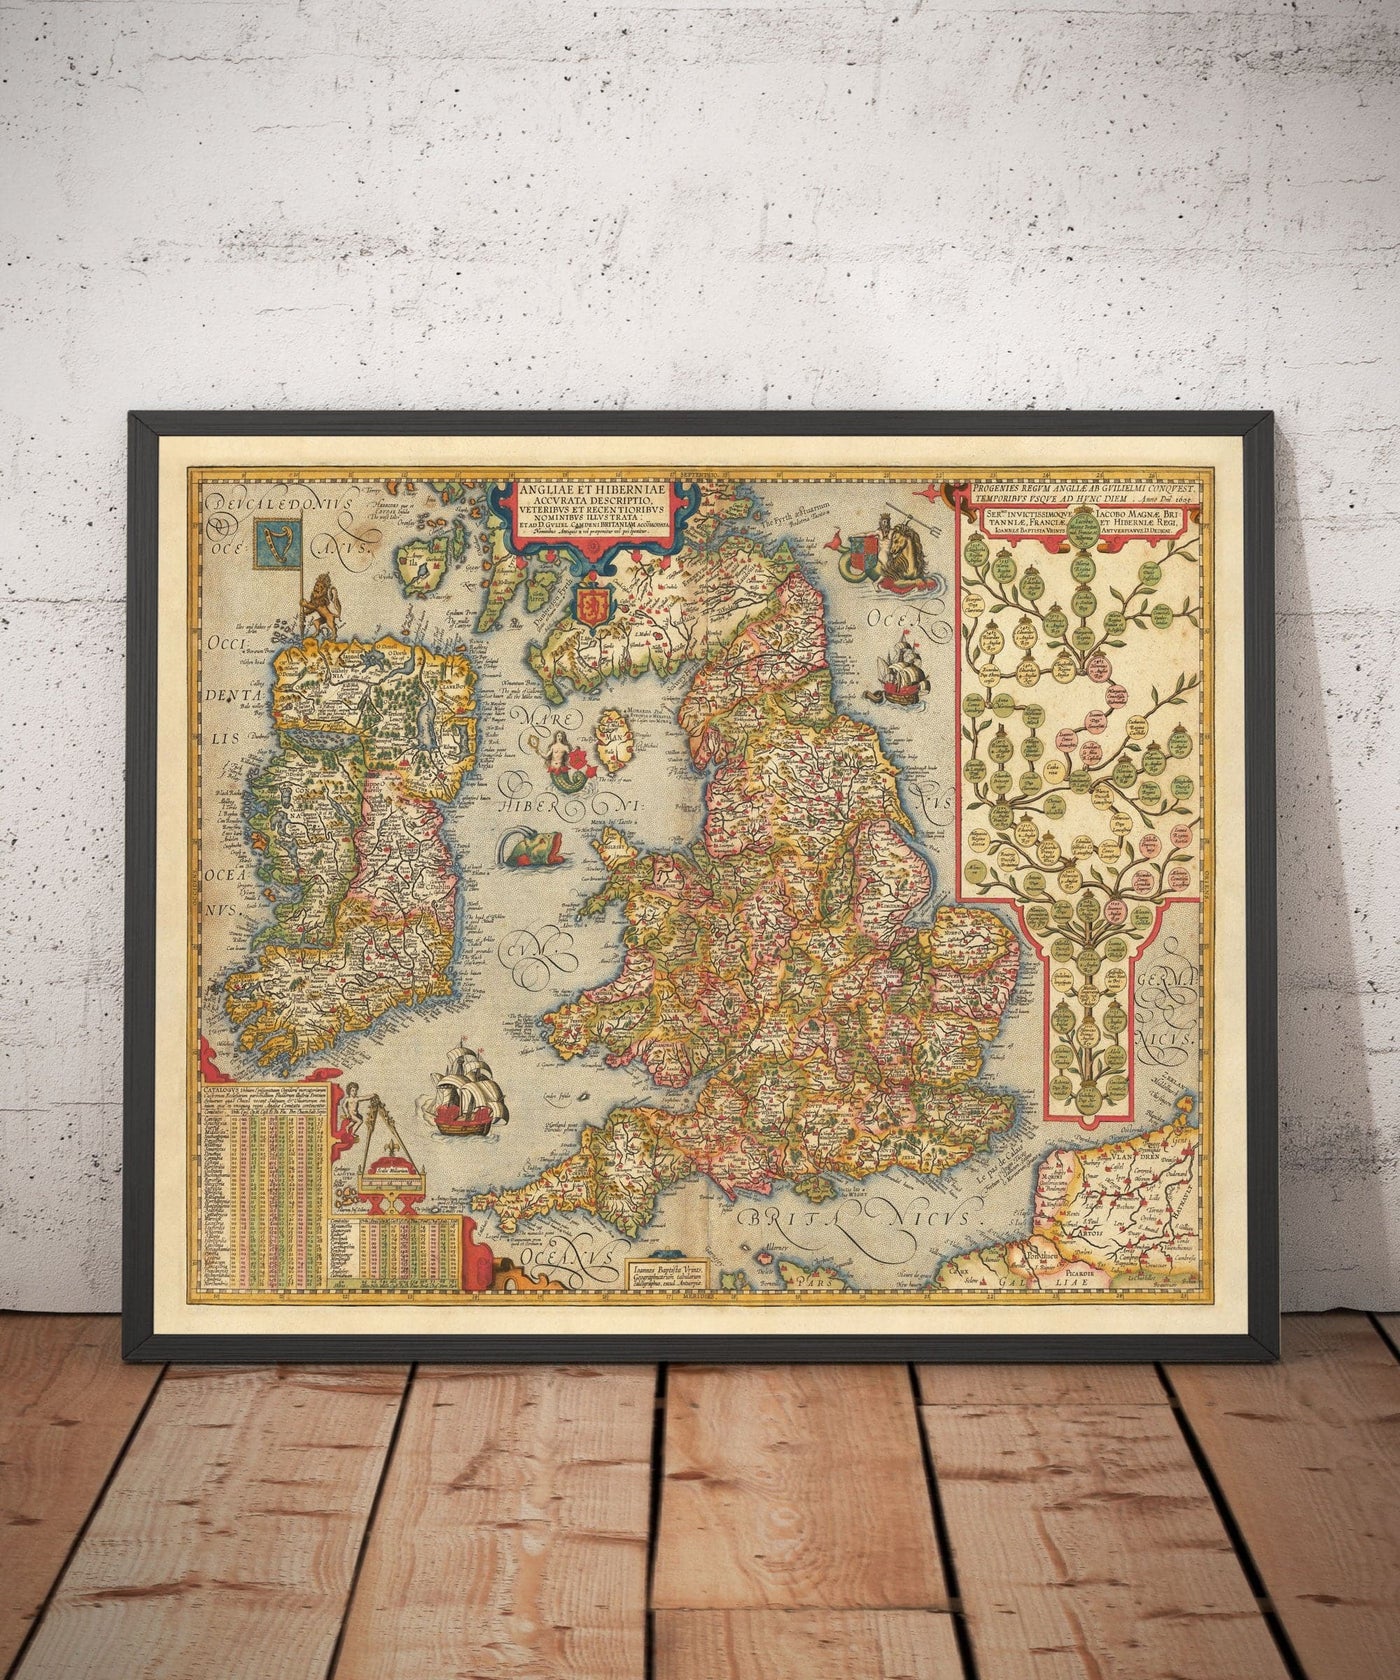 Old Colour Map of England & Ireland in 1605 by Abraham Ortelius - History & Monarchy Family Tree - Stuarts, Tudors, Plantagenets